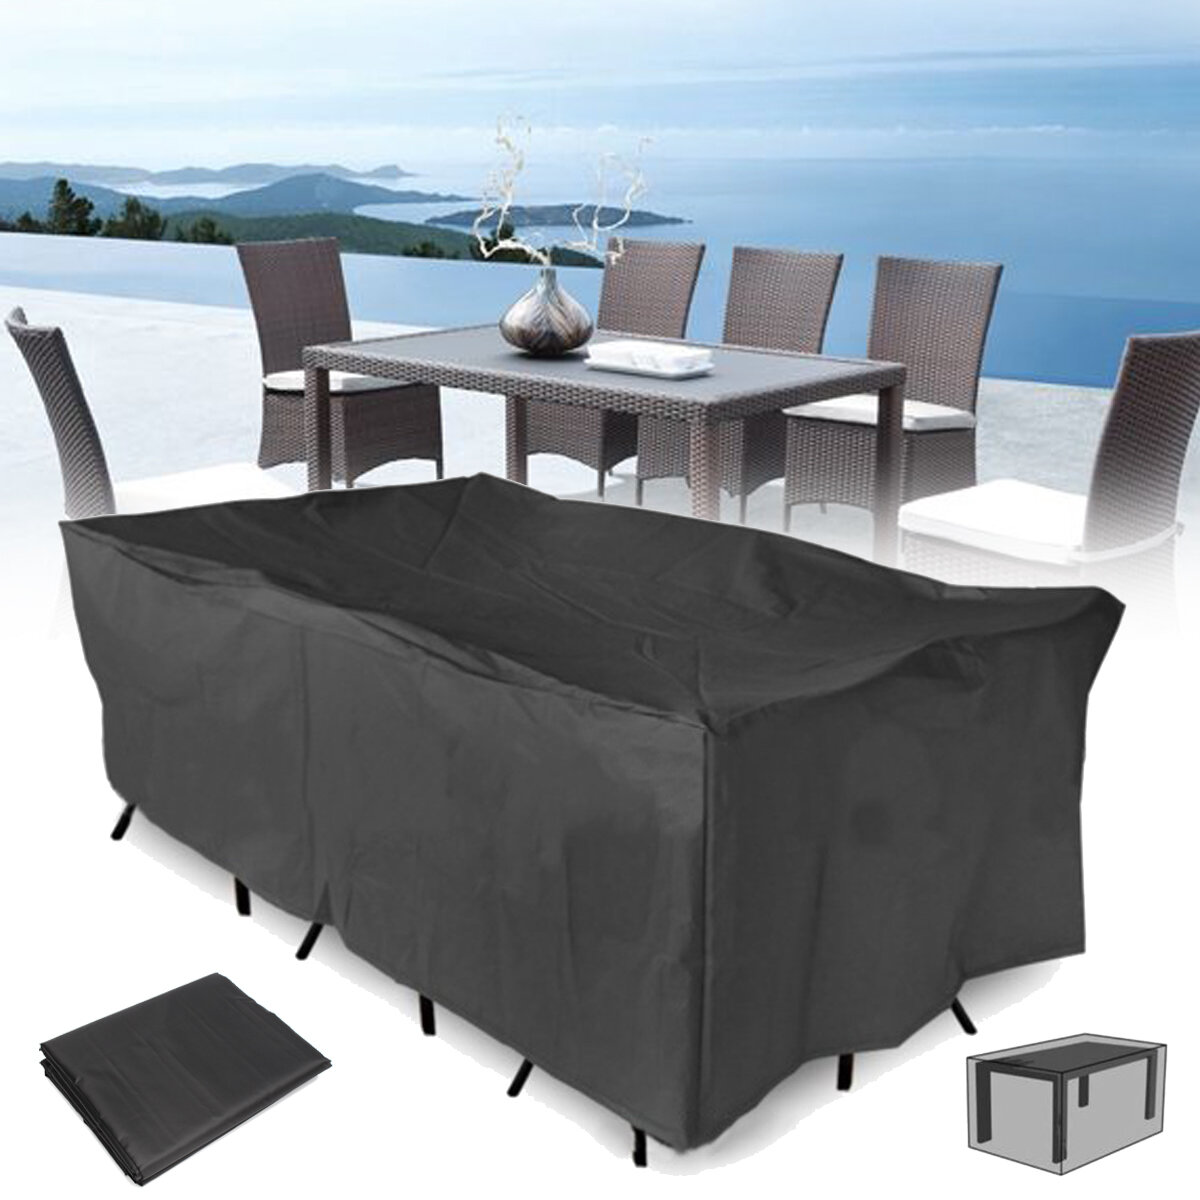 320x220x70CM Outdoor Garden Patio Furniture Waterproof Dust Cover Mesa Chair Sun Shelter